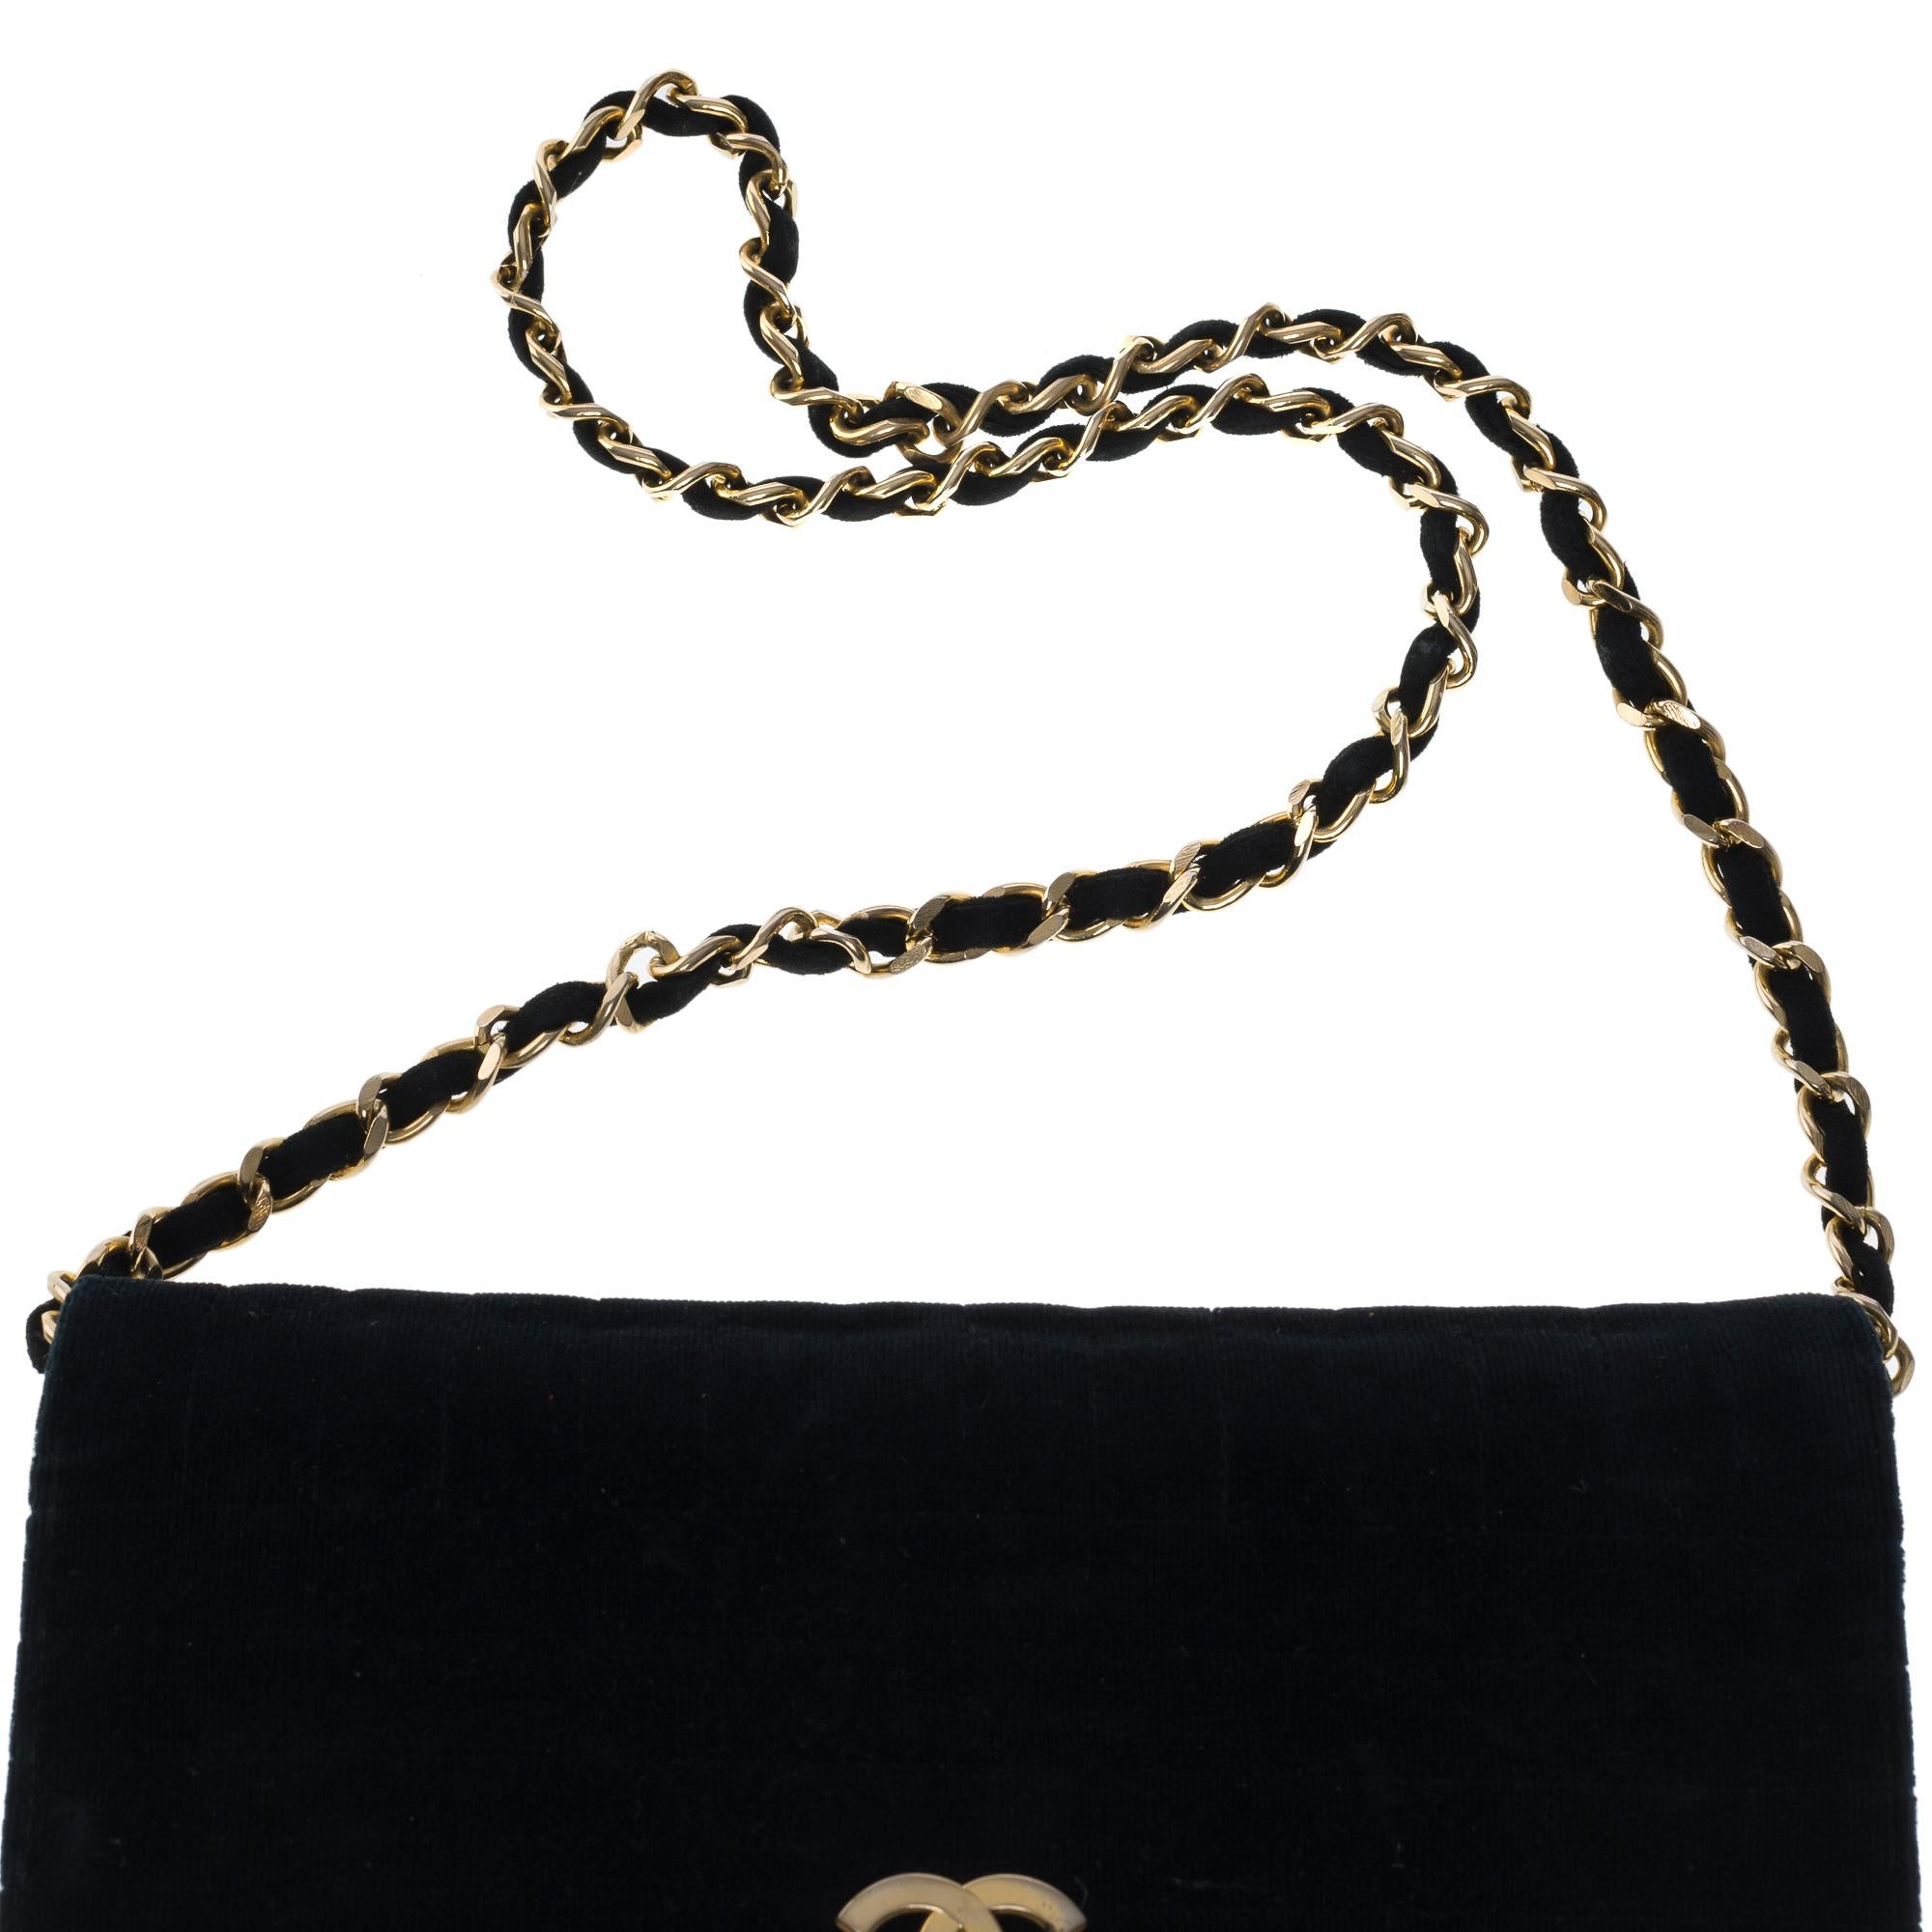 Rare Chanel Classic shoulder flap bag in black velvet, GHW 4